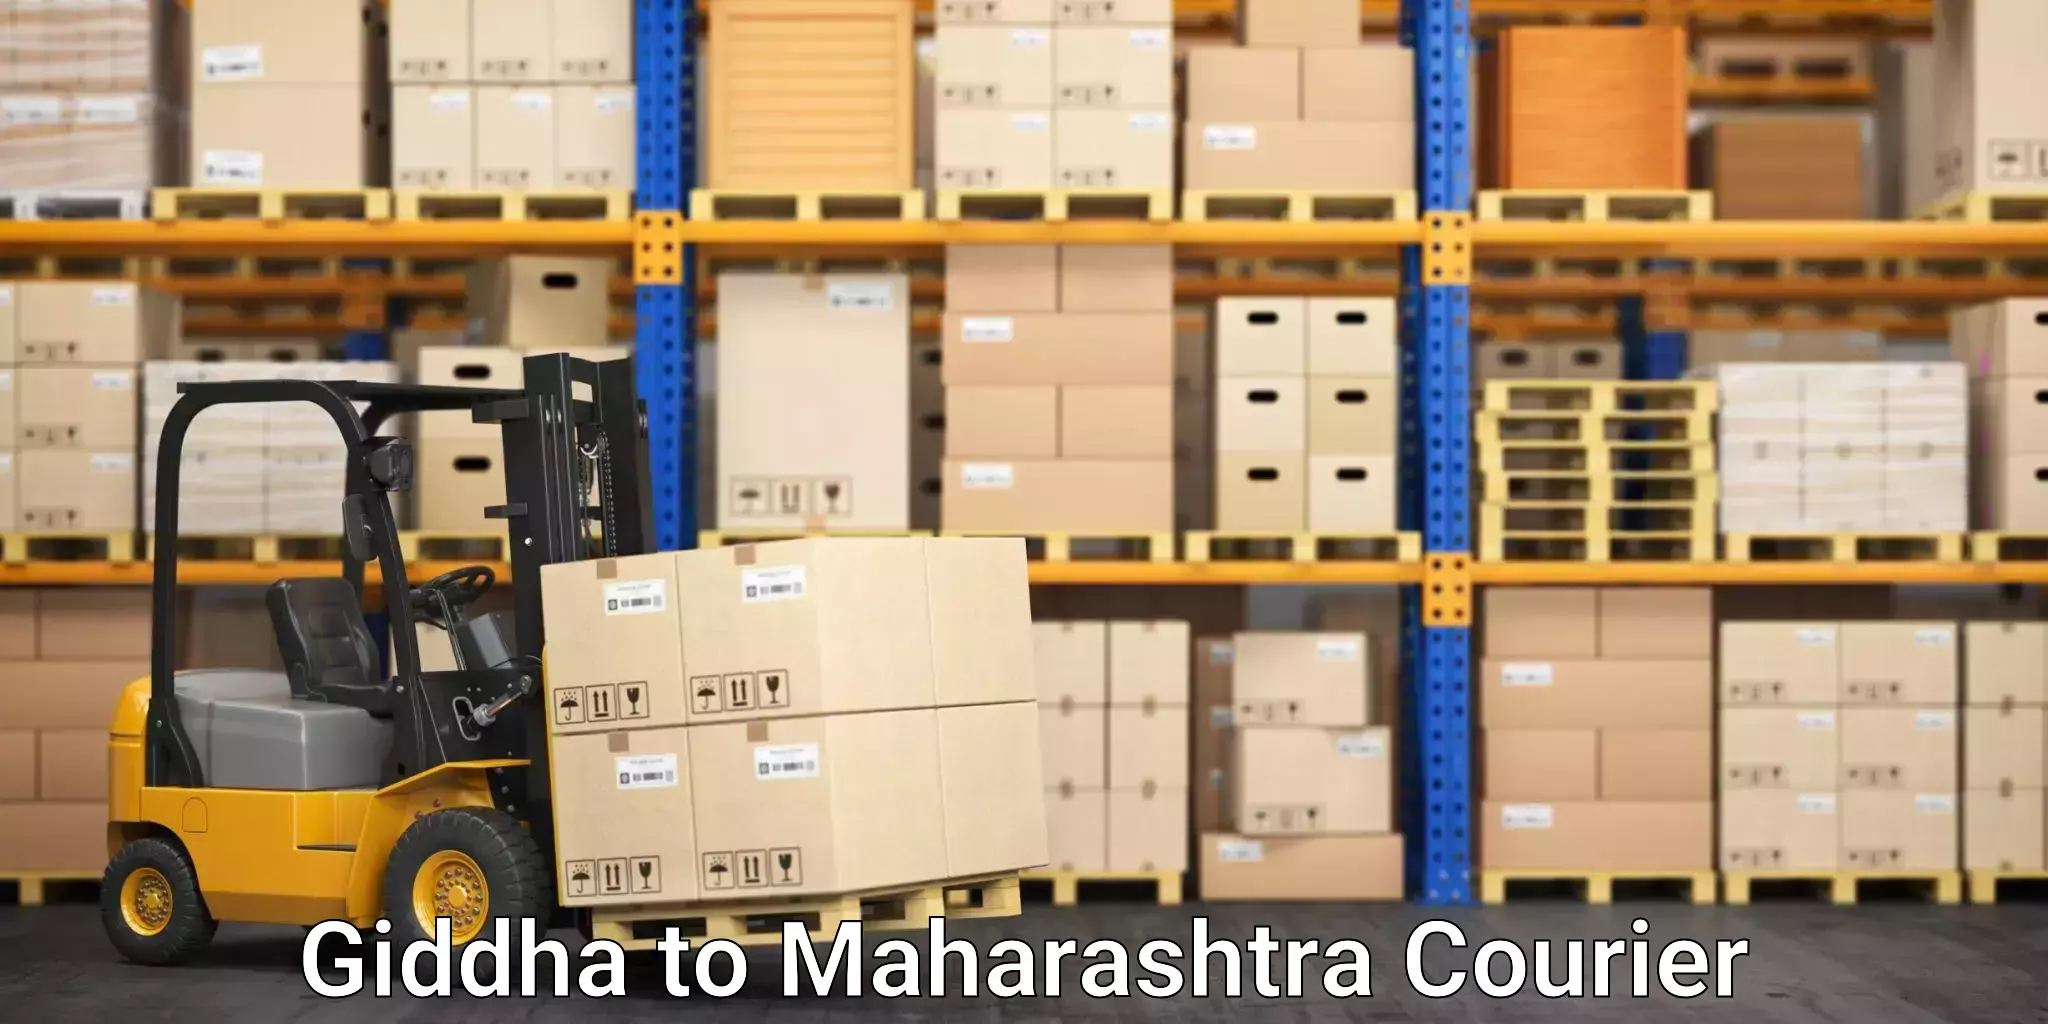 Professional furniture movers Giddha to Maharashtra